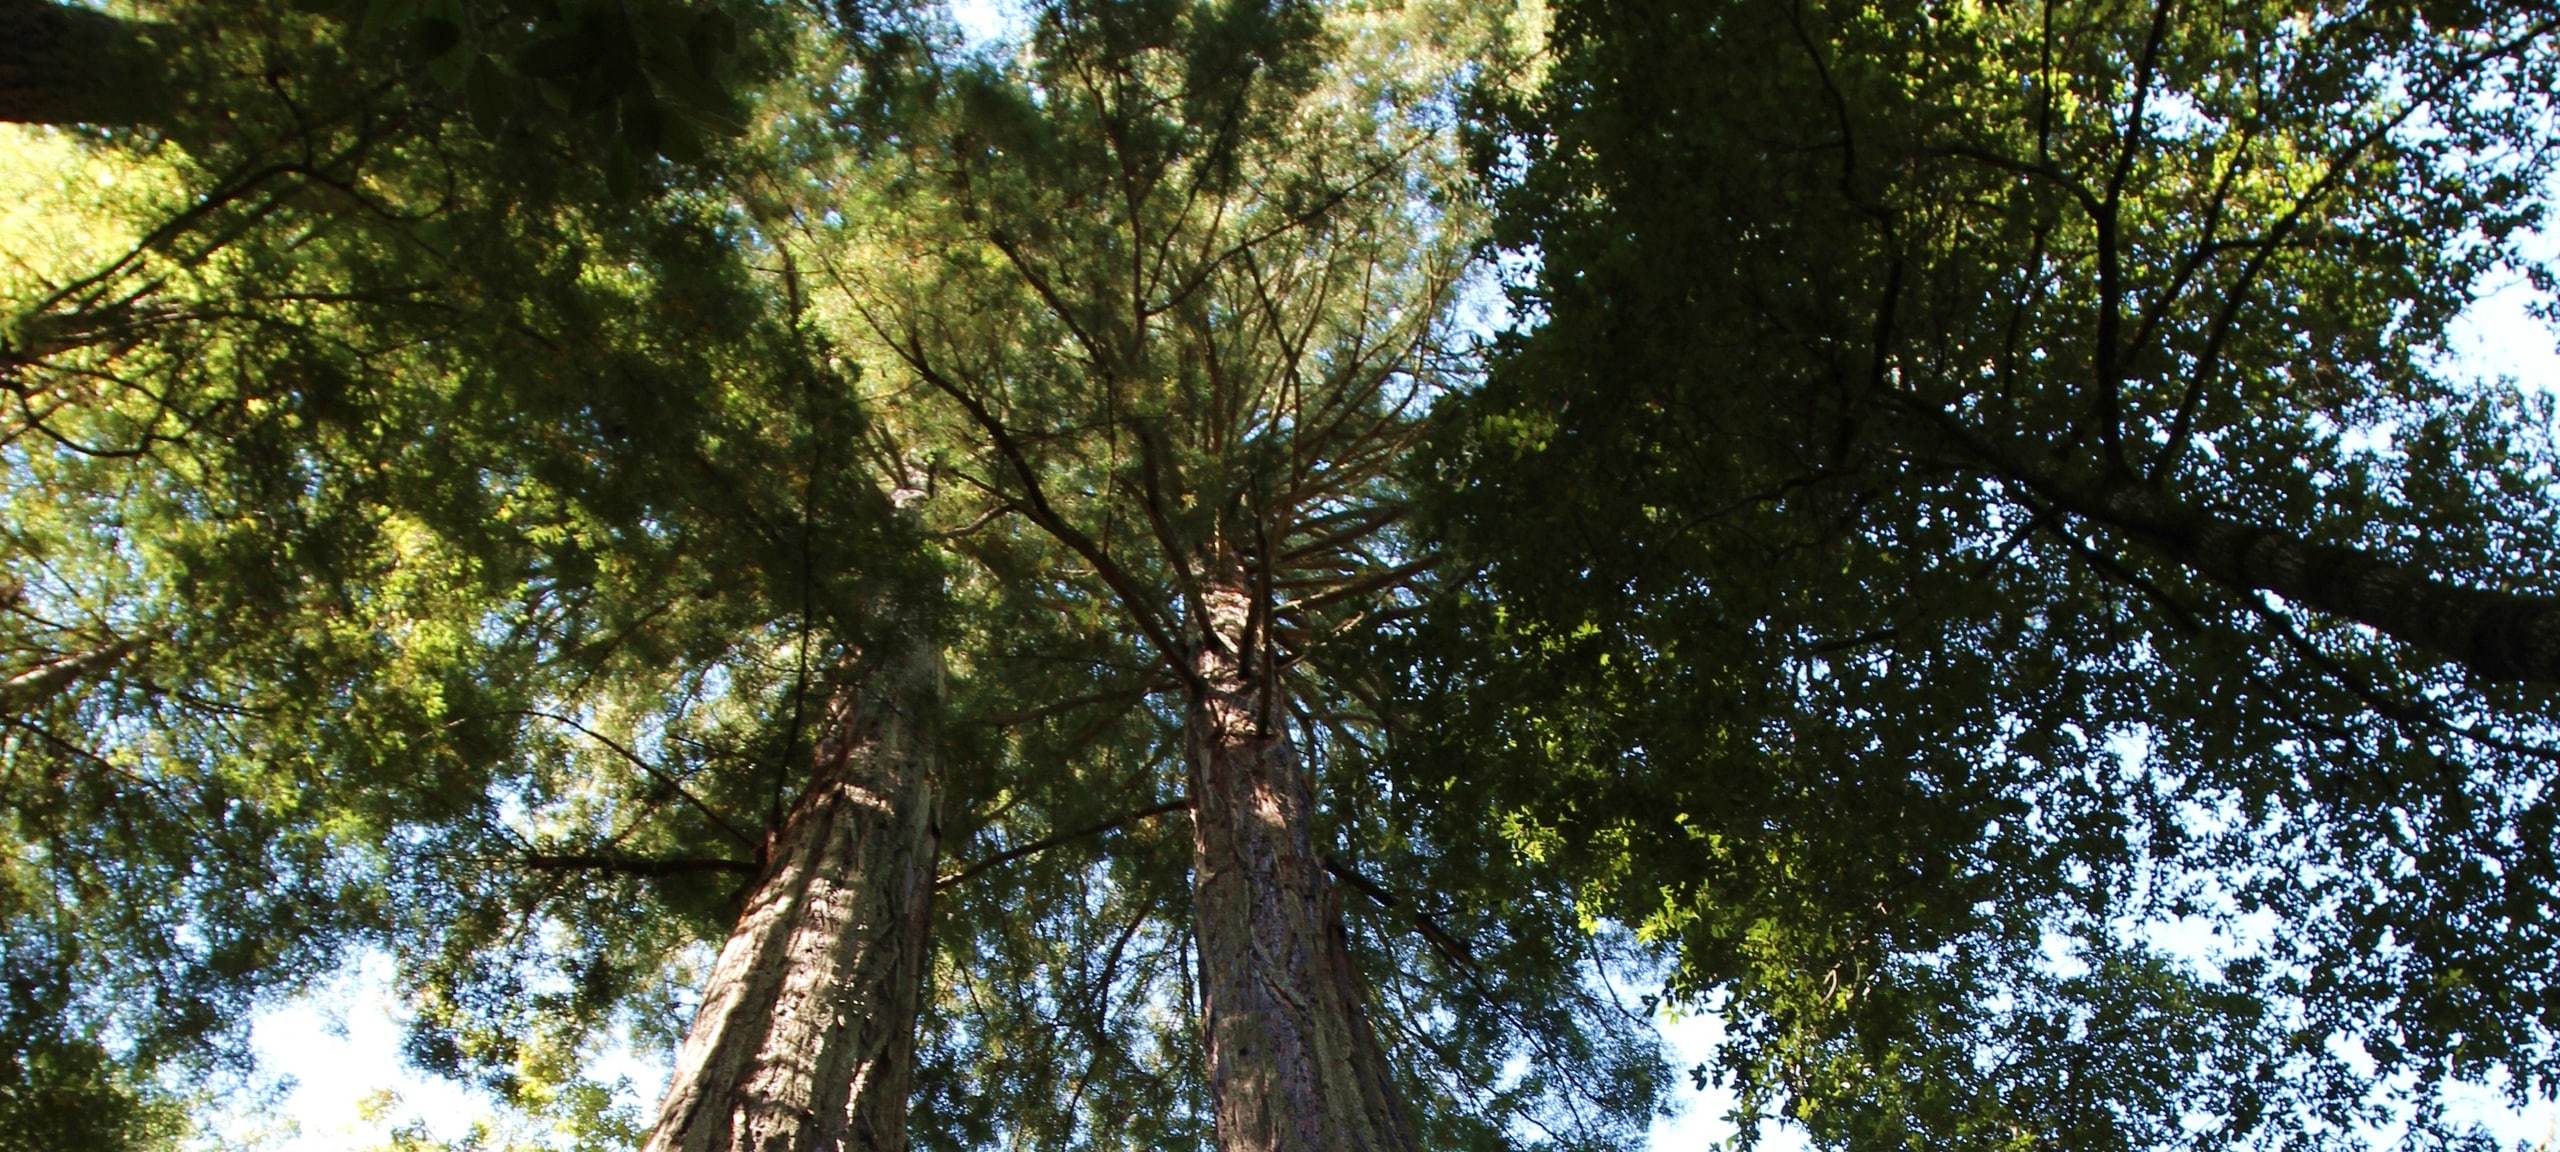 Trees at Big Basin Redwoods State Park in Boulder Creek, CA